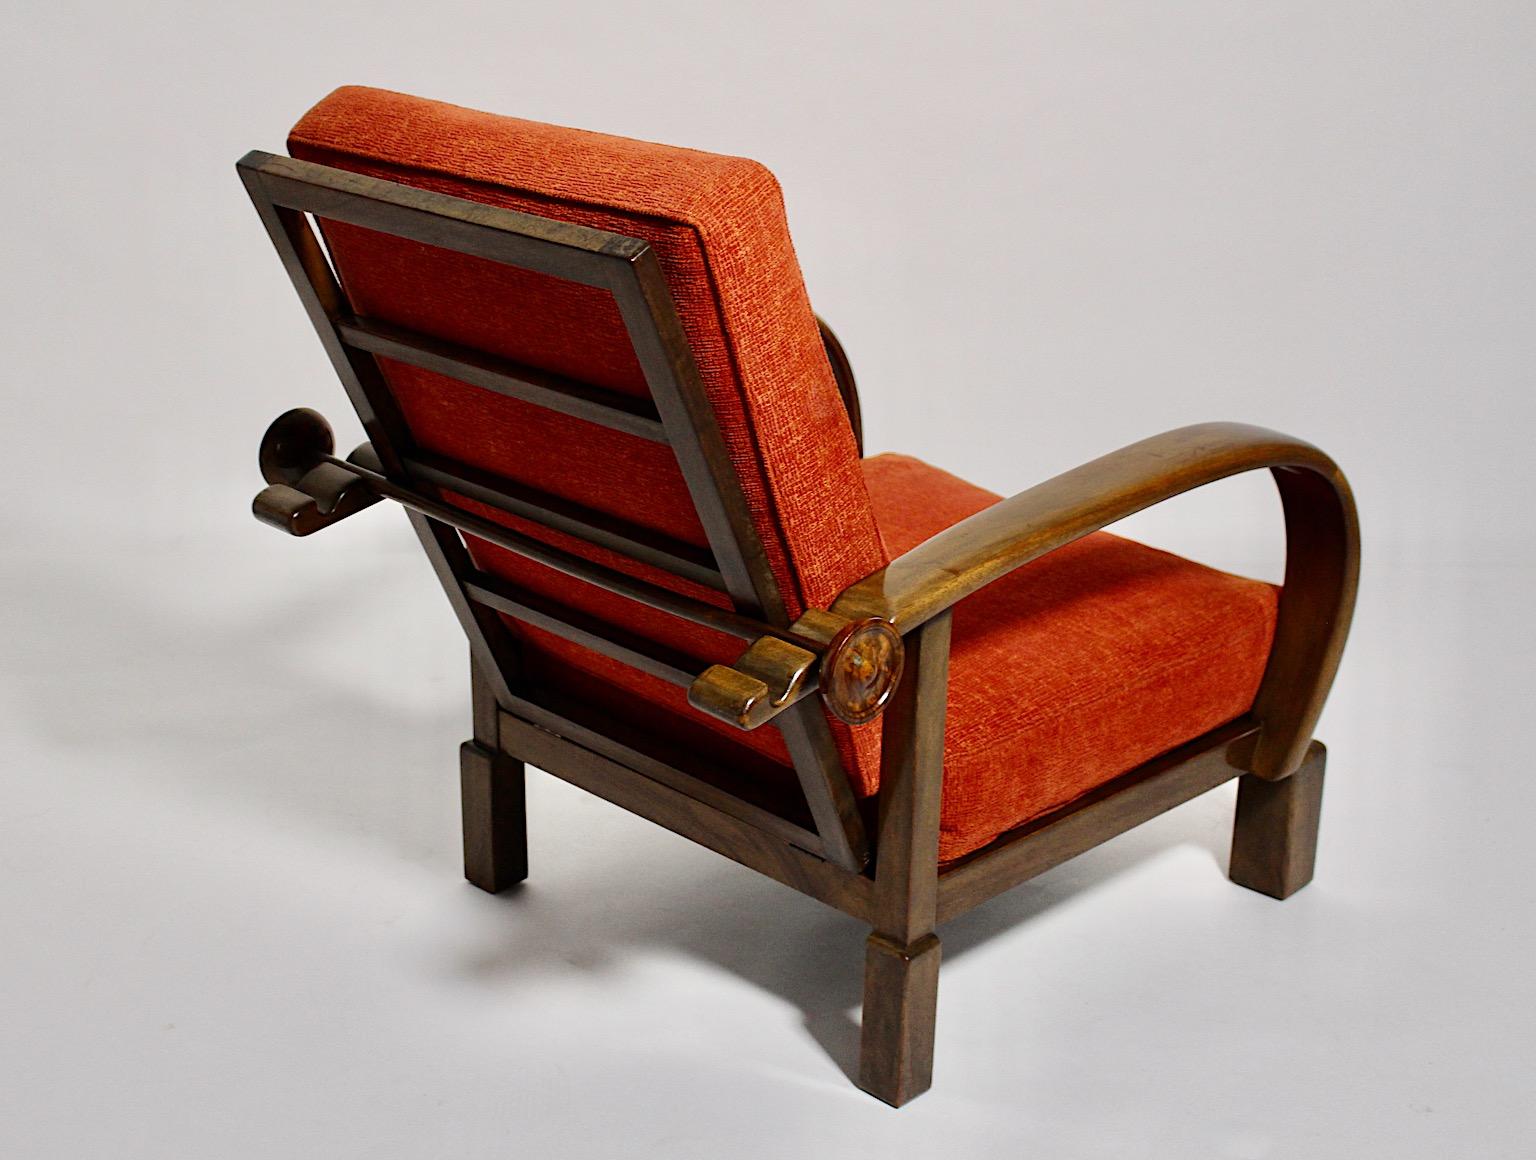 Upholstery Art Deco Vintage Walnut Burnt Orange Armchair Lounge Chair circa 1925 Austria For Sale